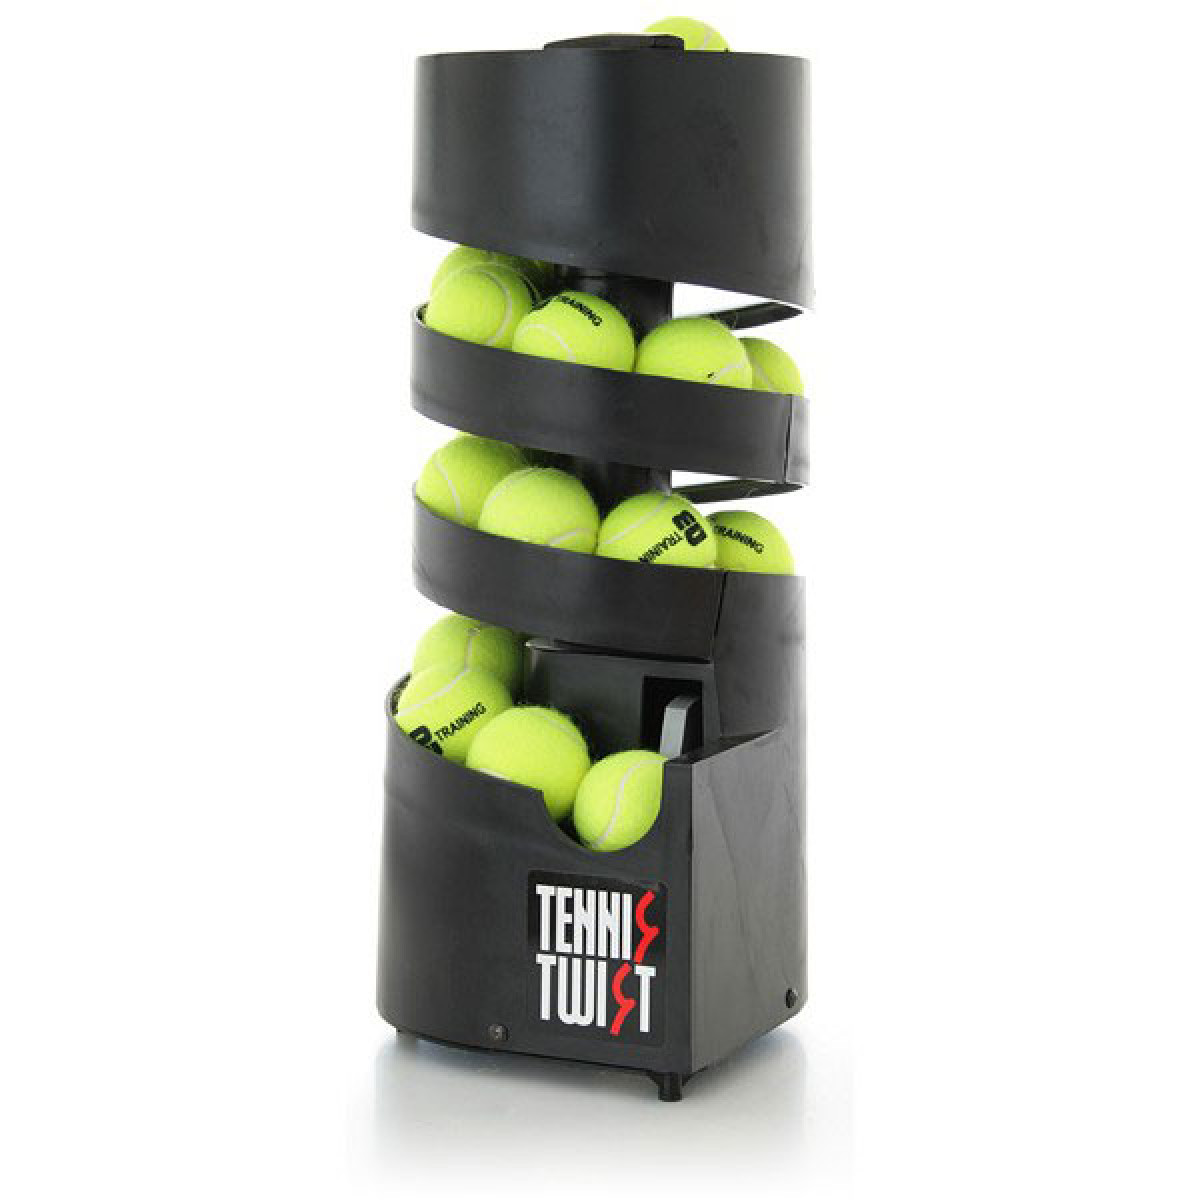 Lanzapelotas tenis Tudor Plus 150 pelotas - Accesorios varios